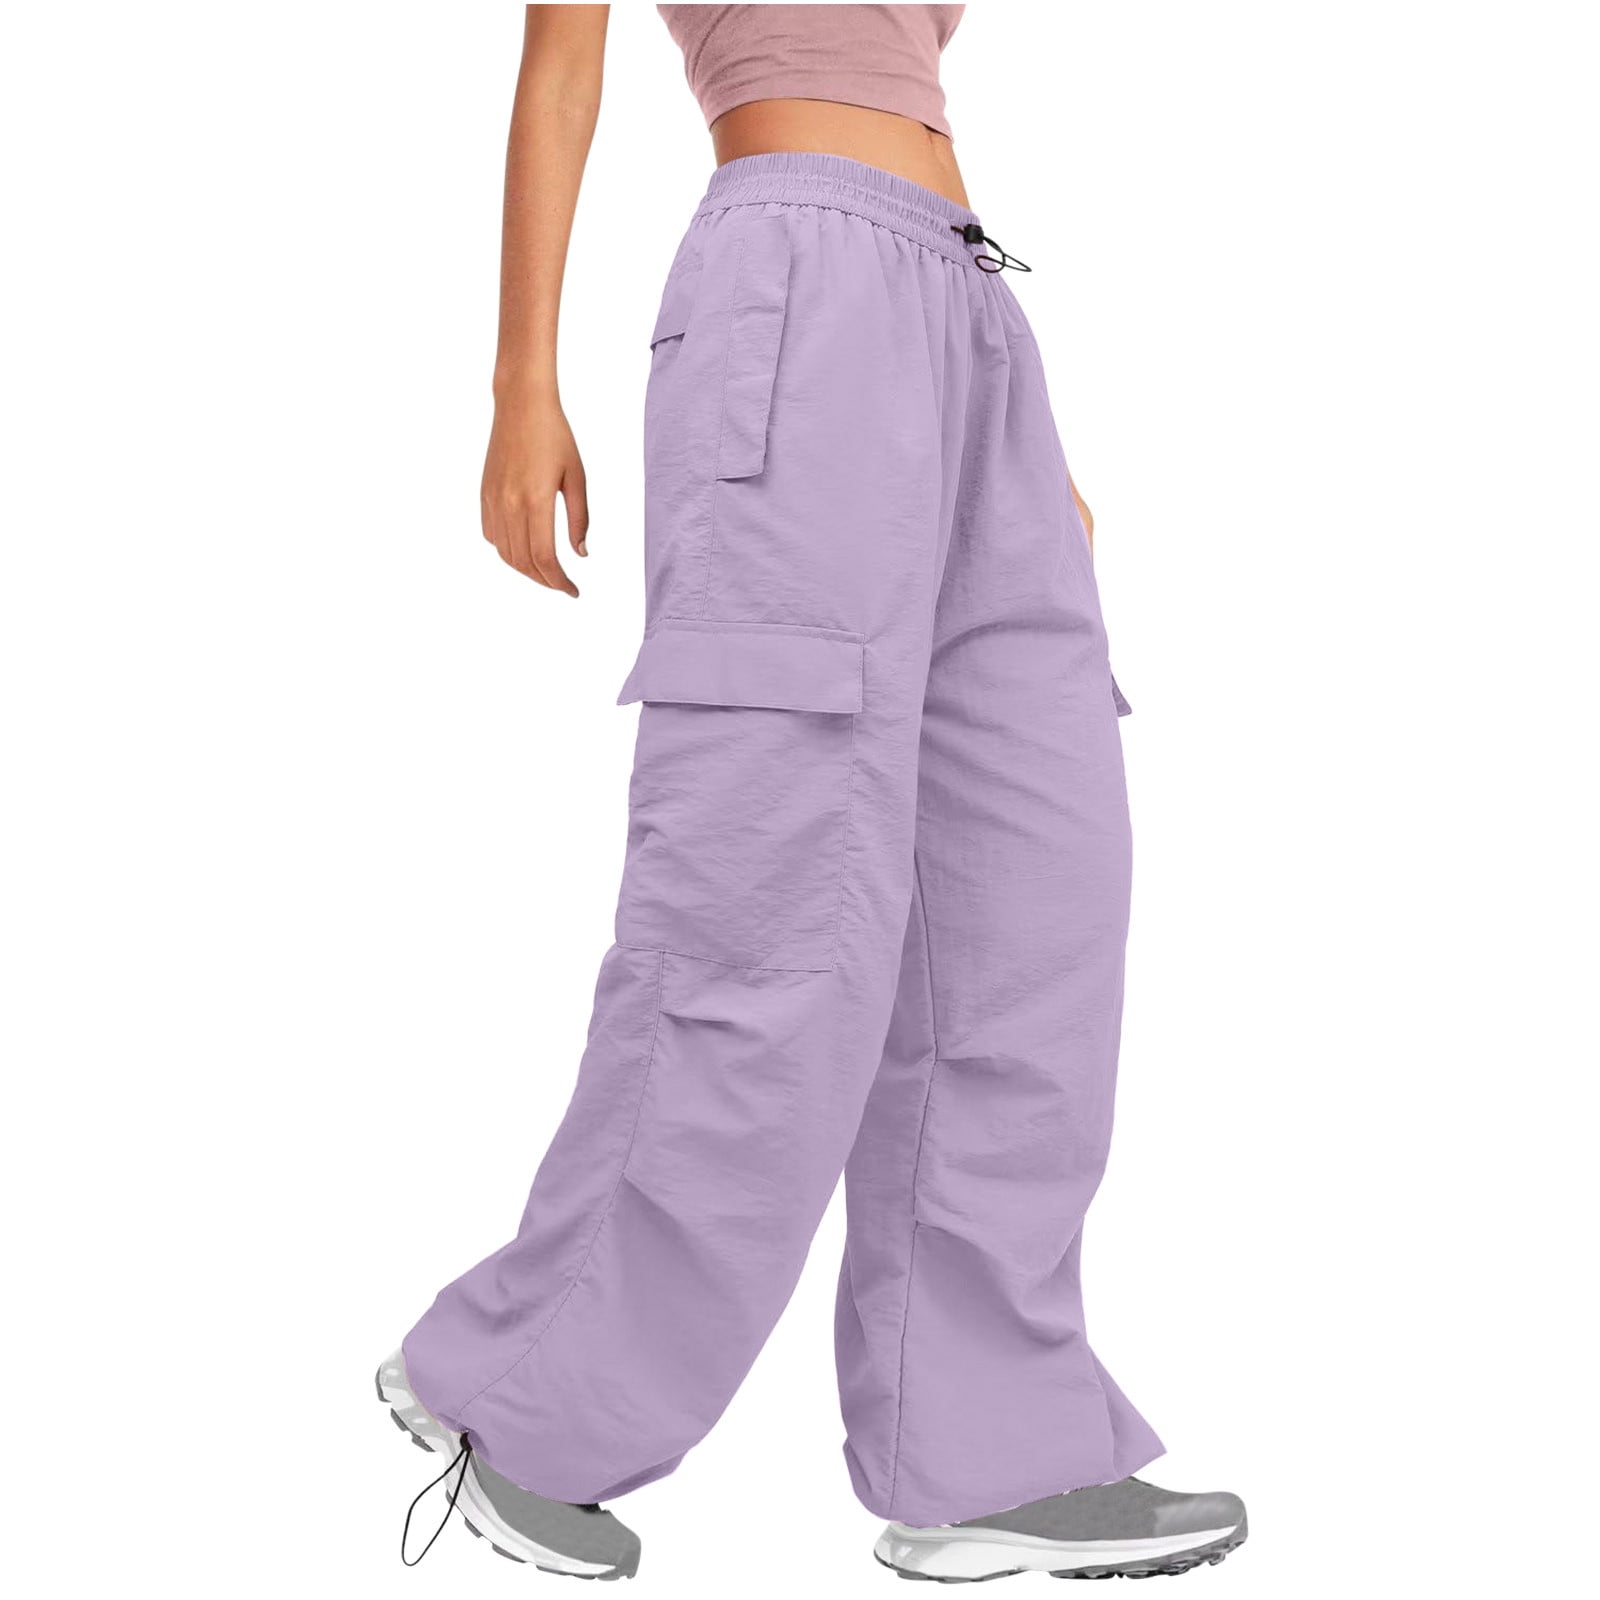 KJIUQ Parachute Pants for Women Baggy Cargo Pants Multi-Pocket